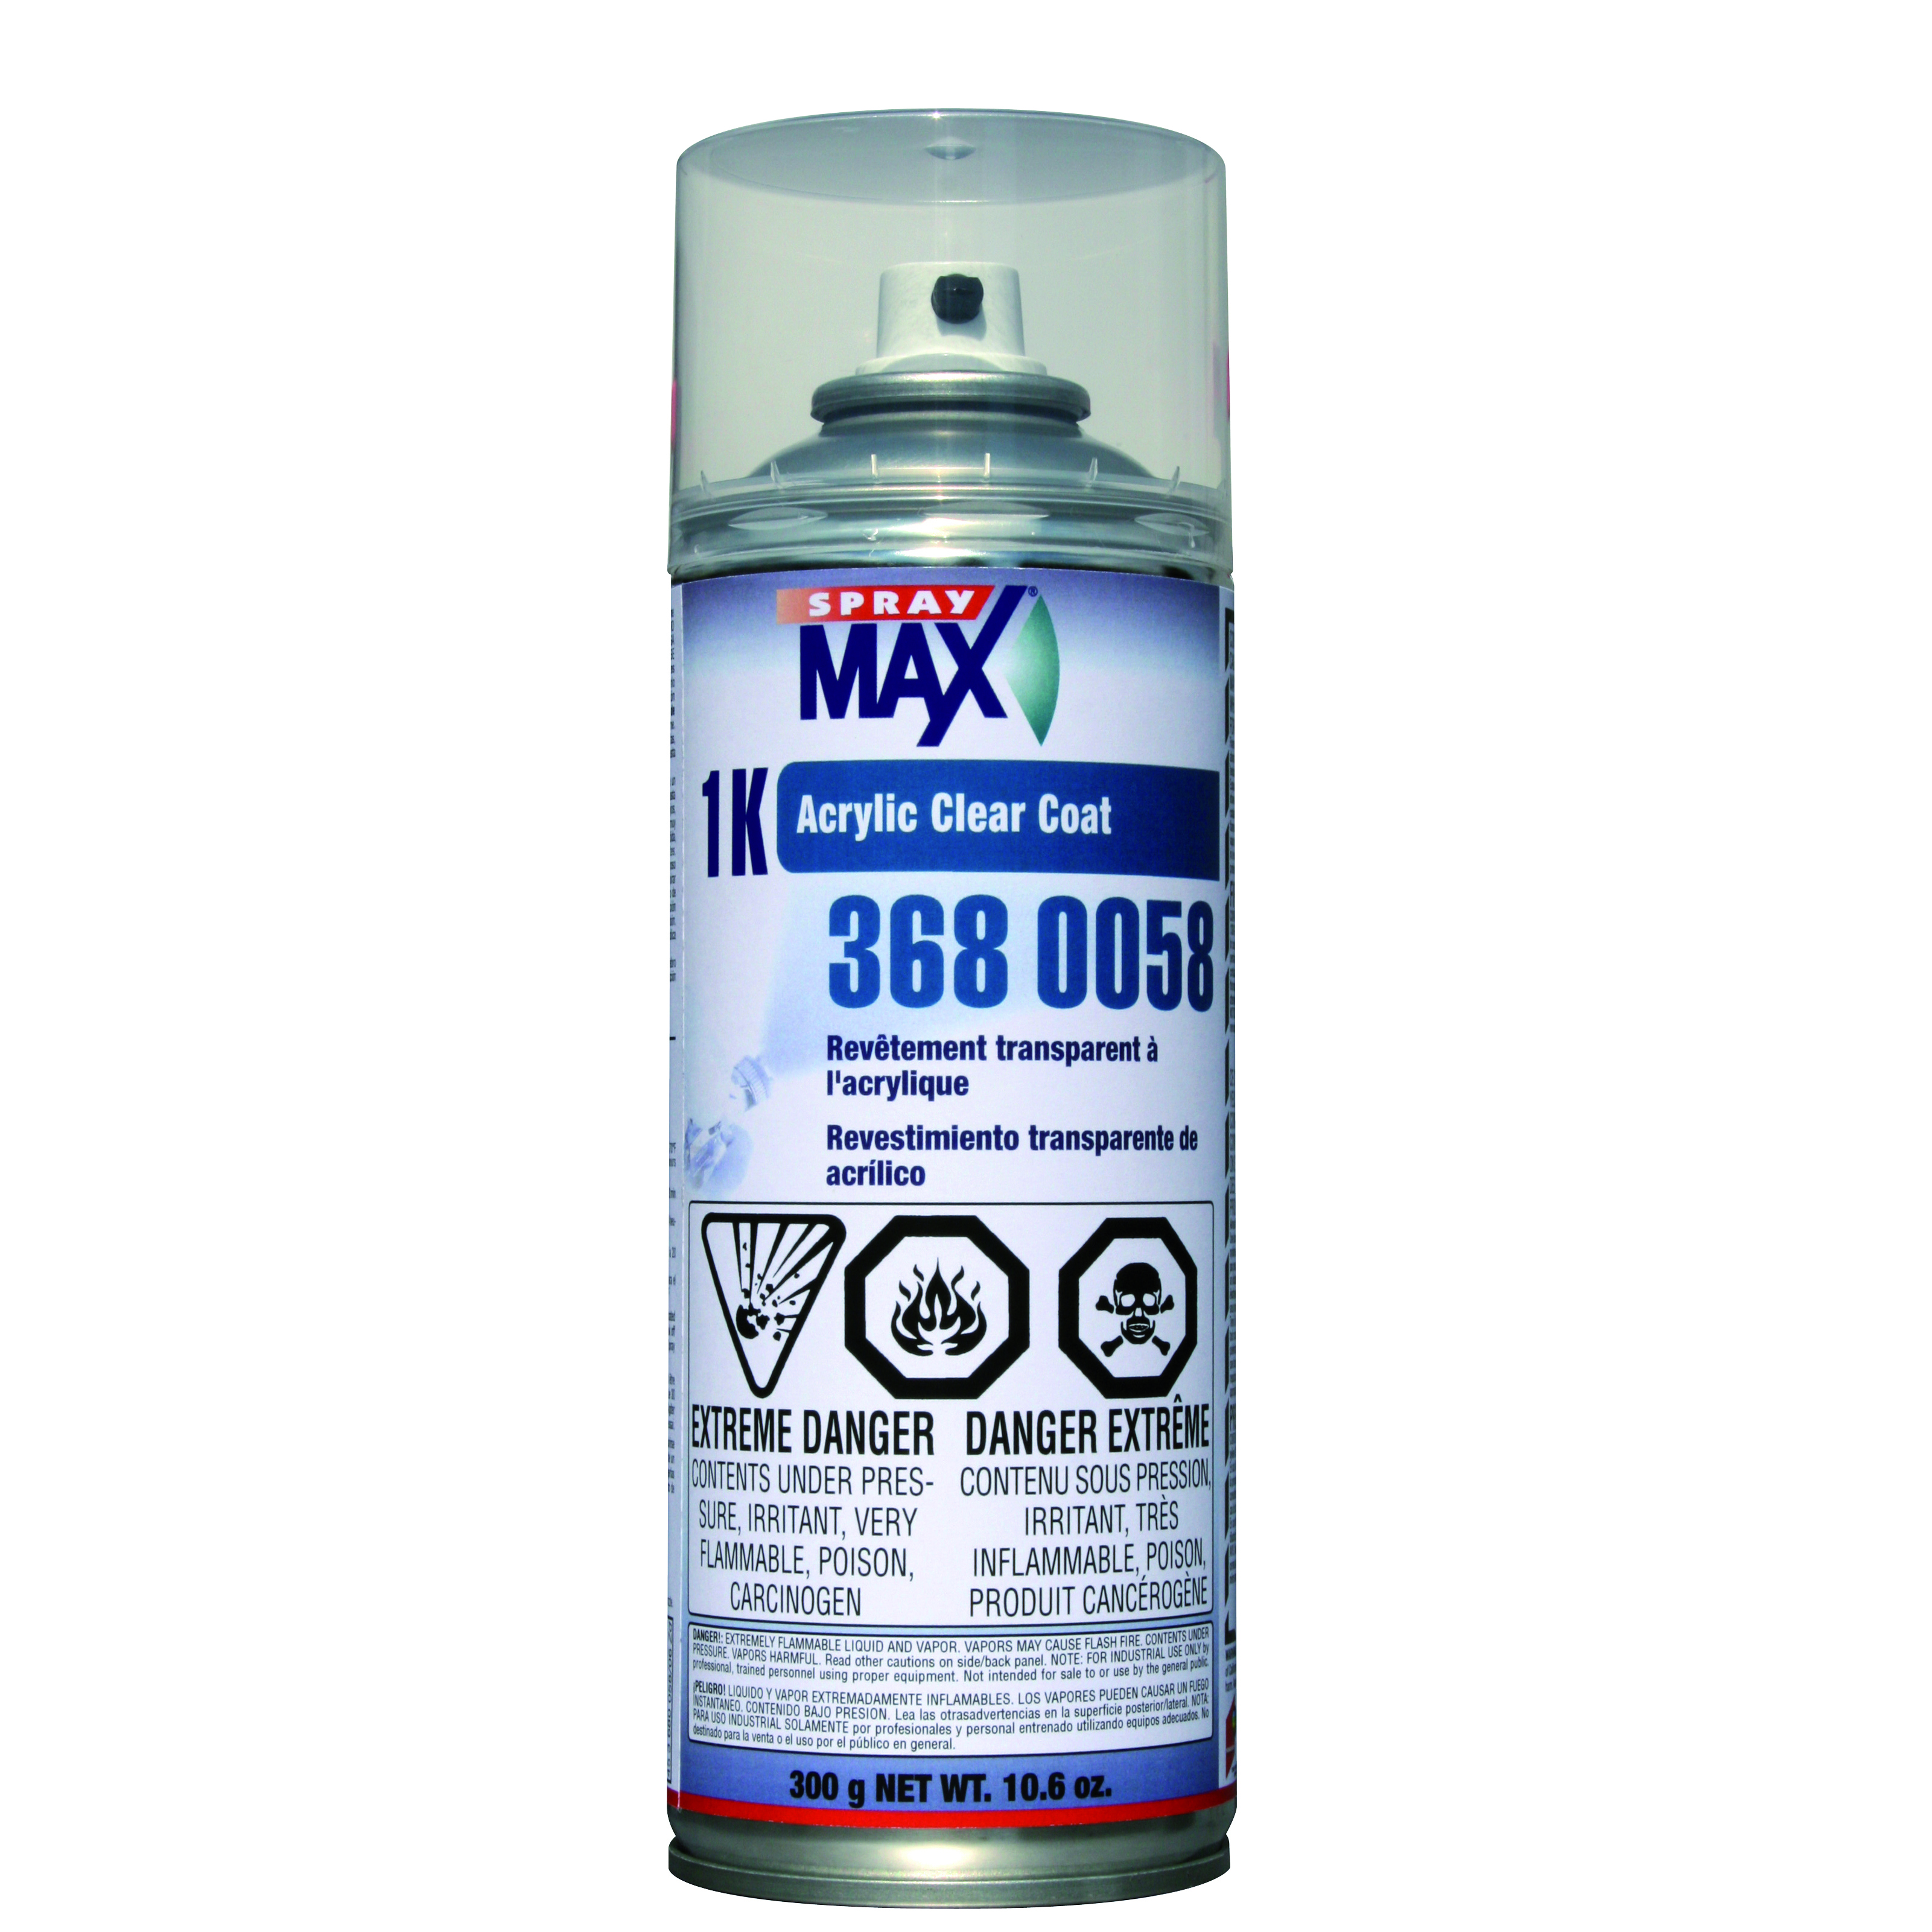 SprayMax 1K Acrylic Clearcoat 3680058